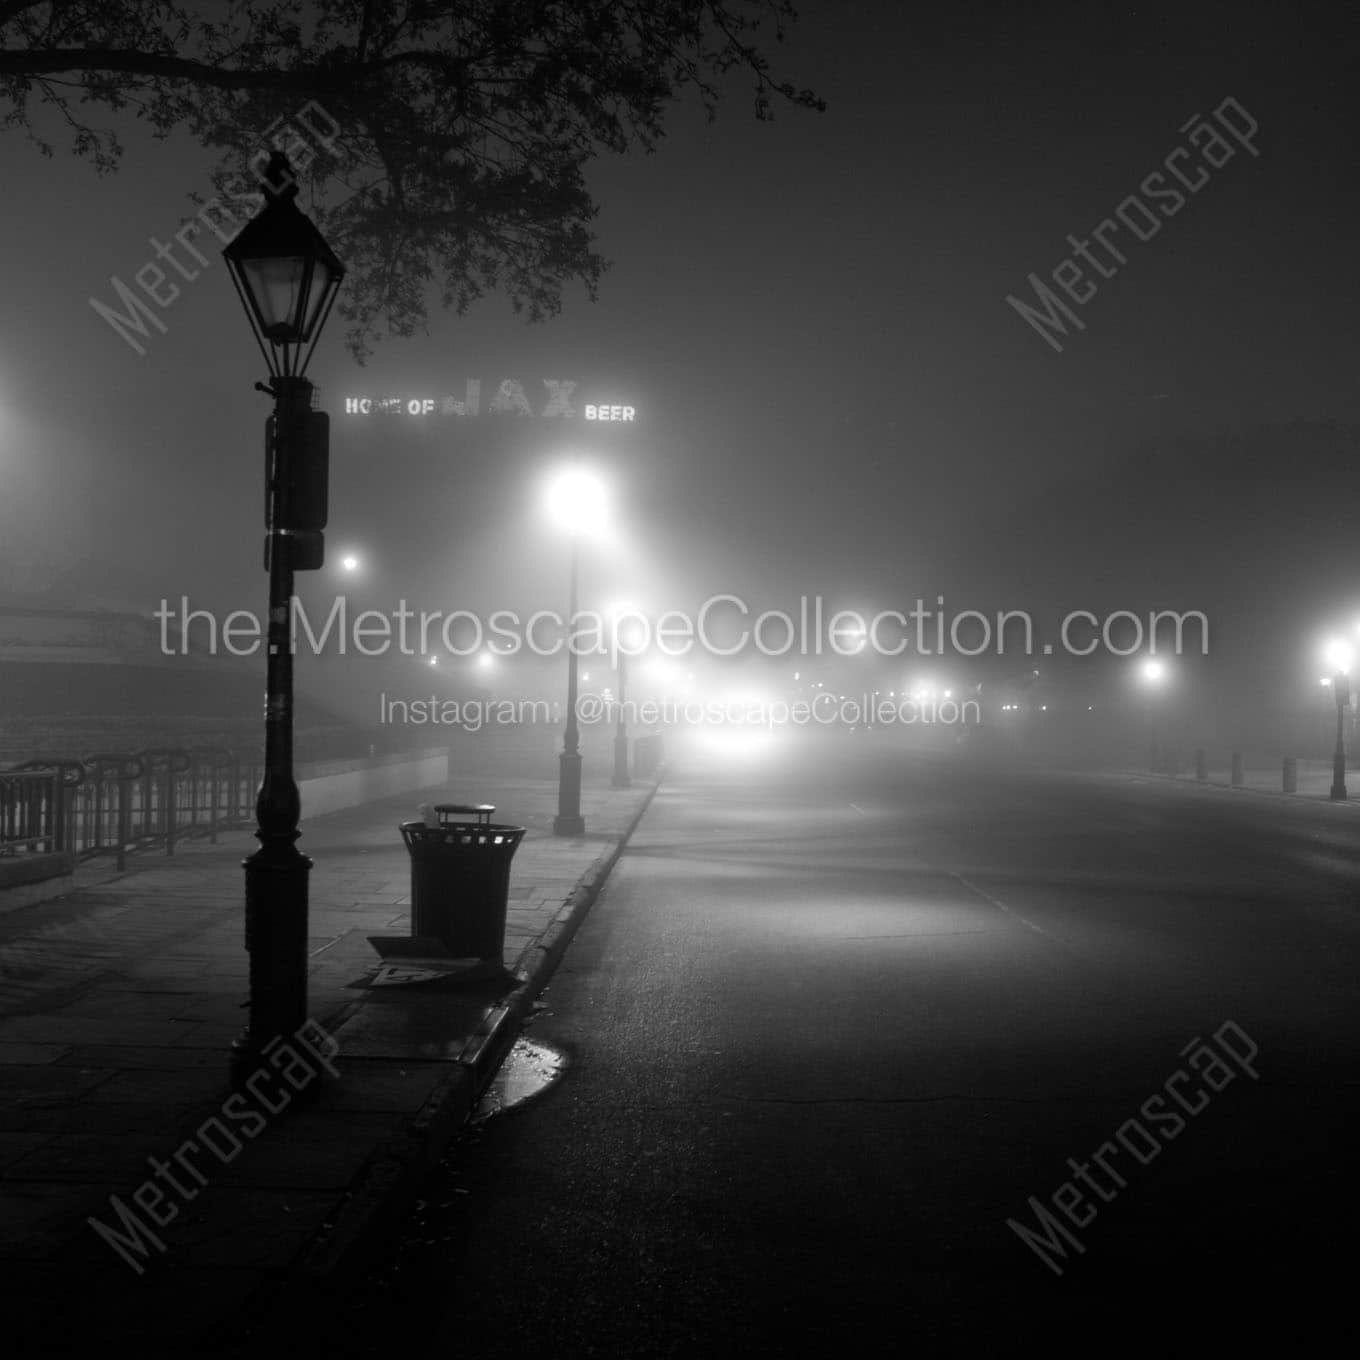 foggy jax brewery at night Black & White Wall Art